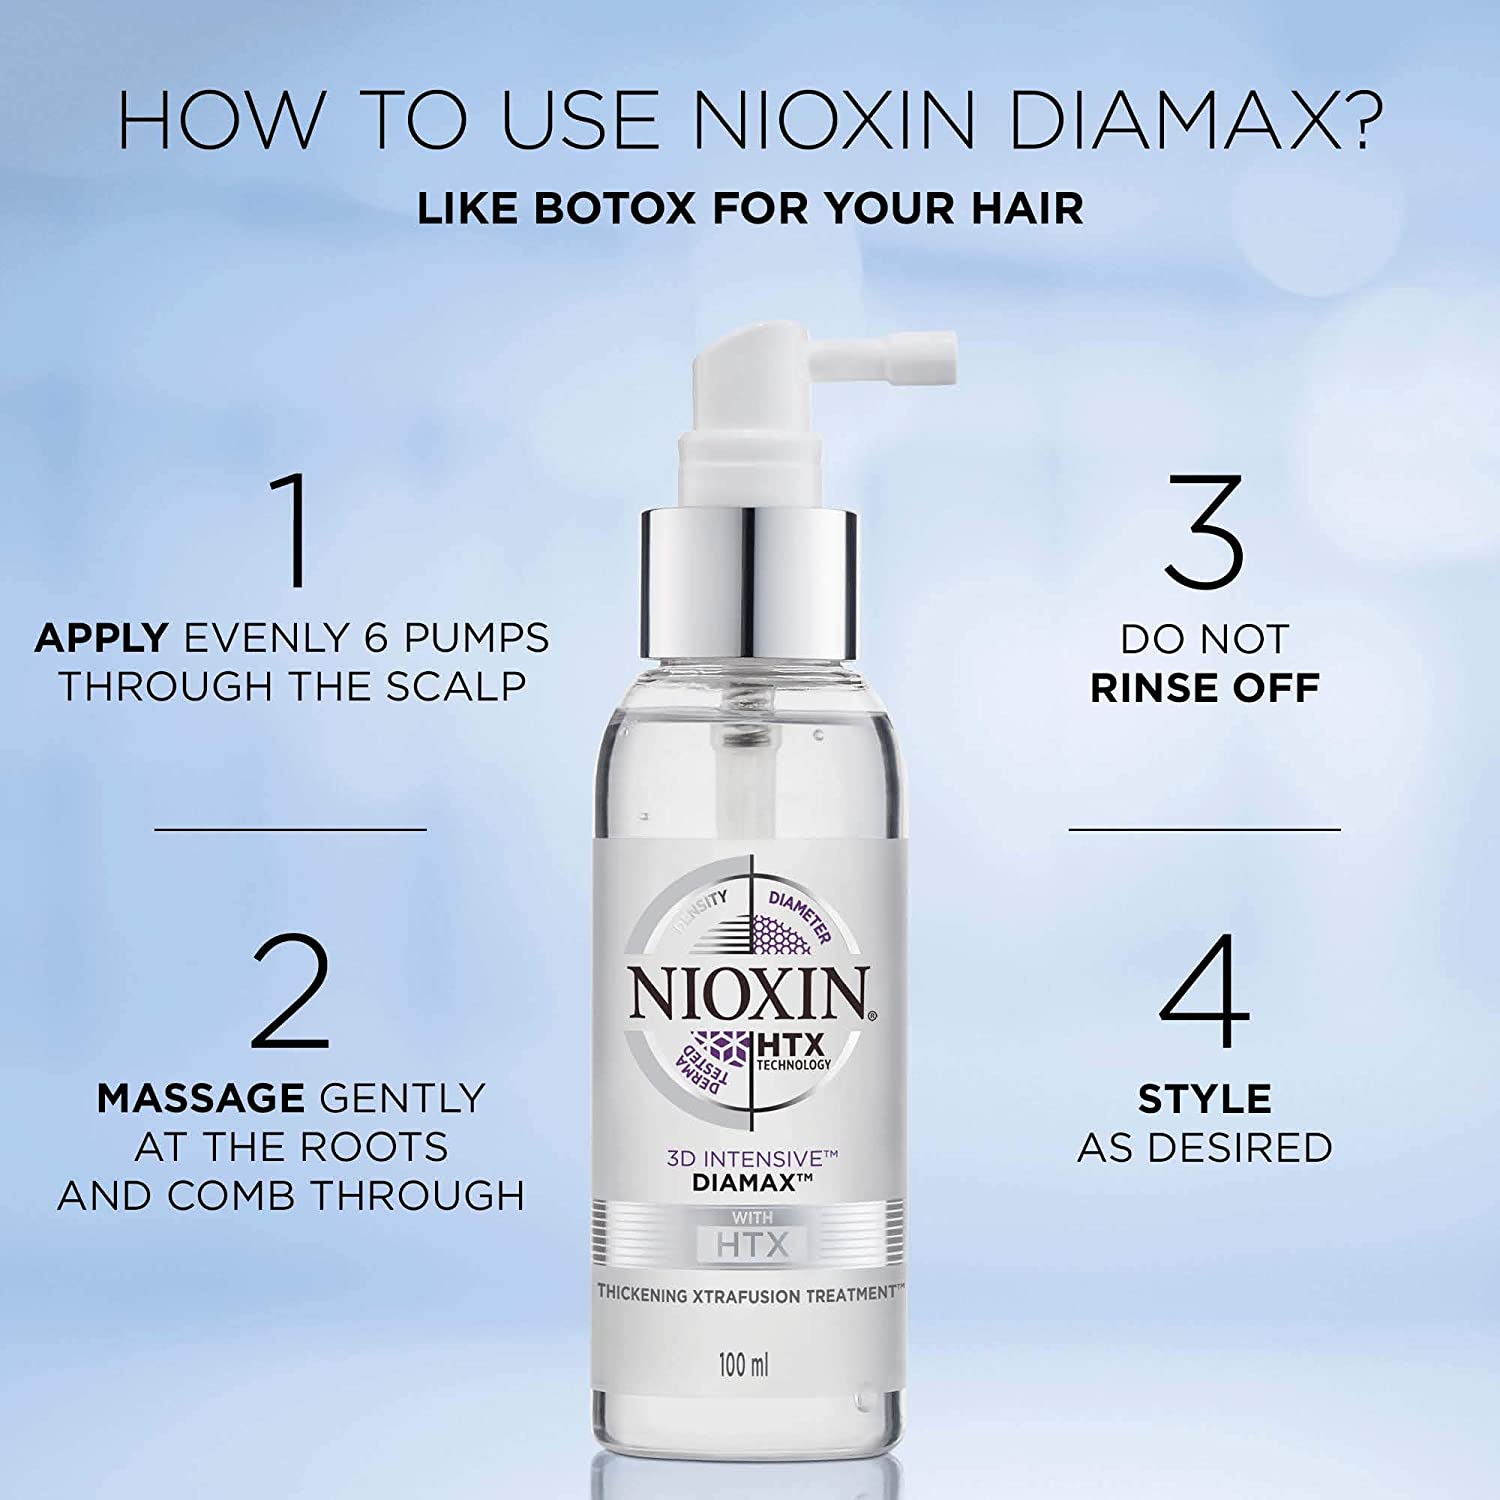 Nioxin Diamax How to Use